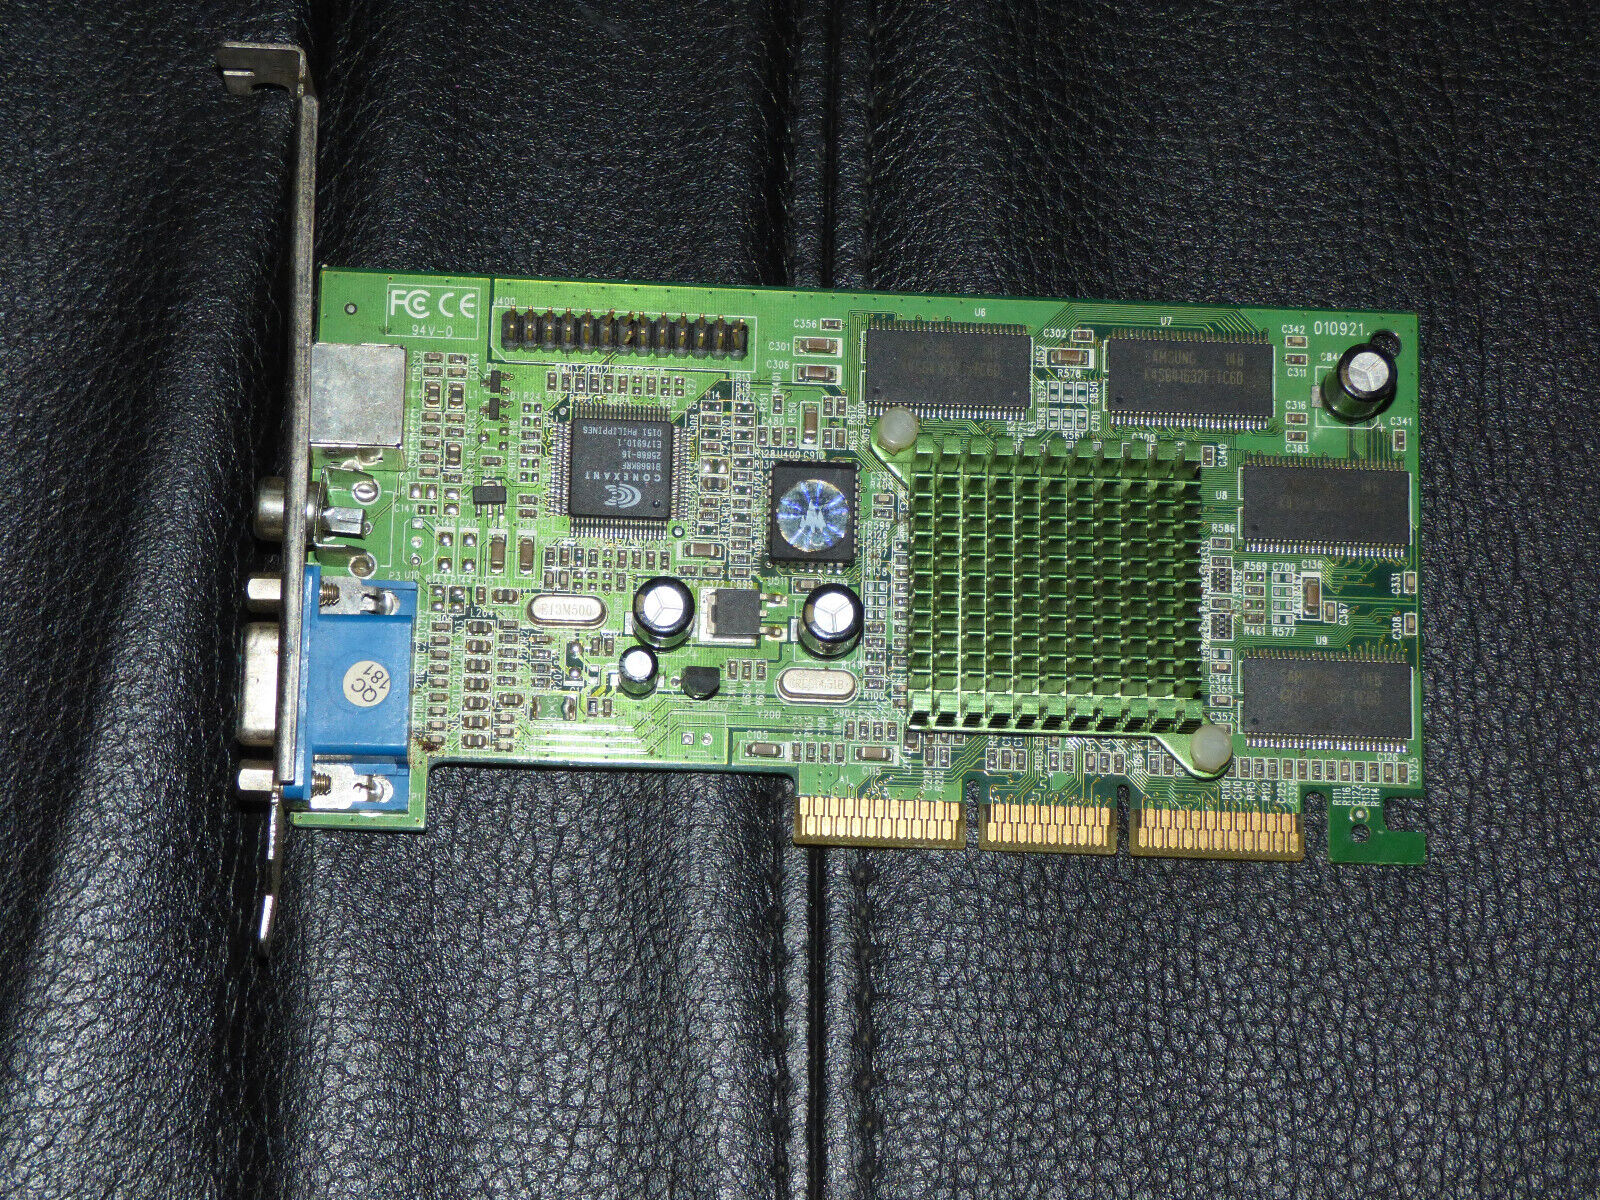 NVIDIA GEFORCE2 MX400 64MB AGP GRAPHICS CARD TESTED